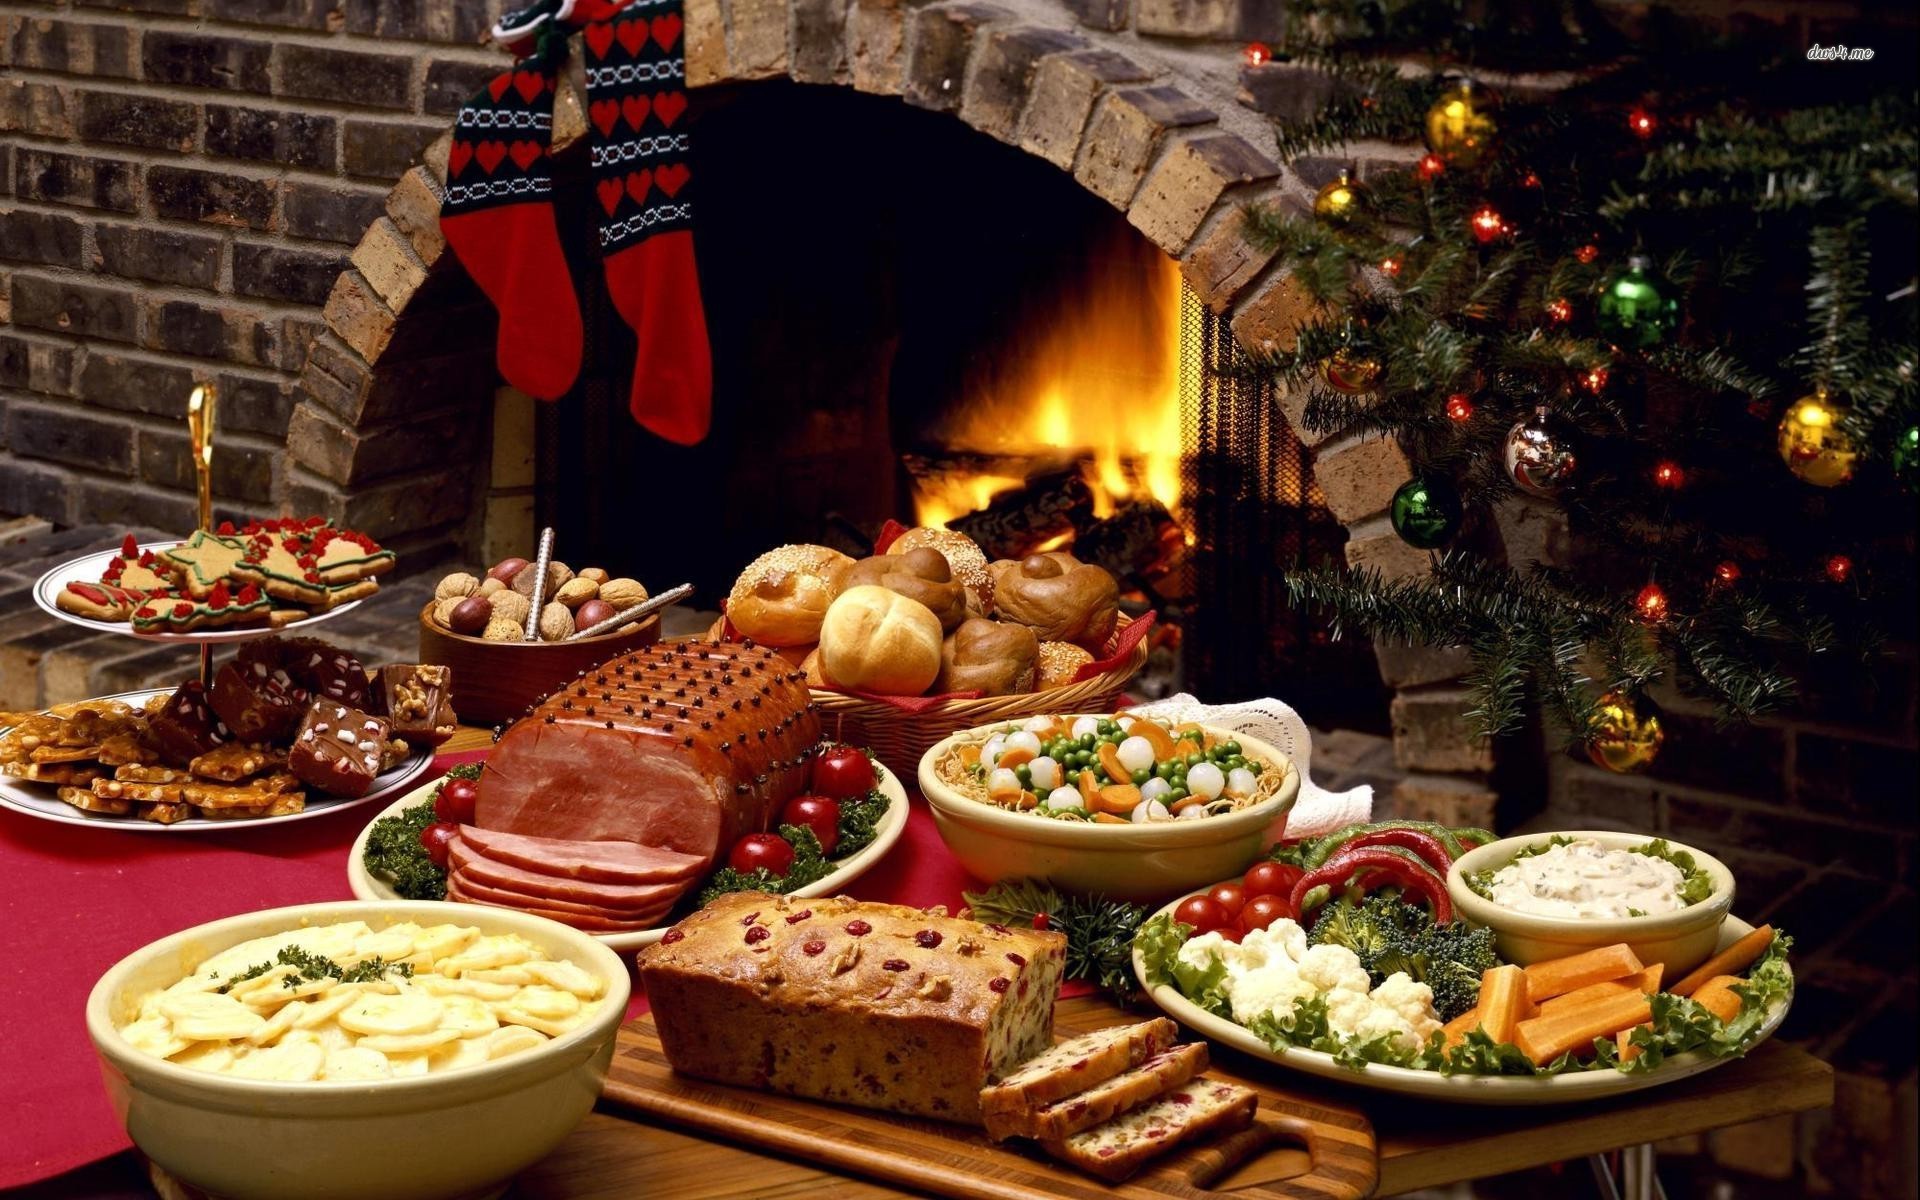 https://tasteofenglishtea.files.wordpress.com/2015/12/christmas-dinner-kf7y0tub.jpg